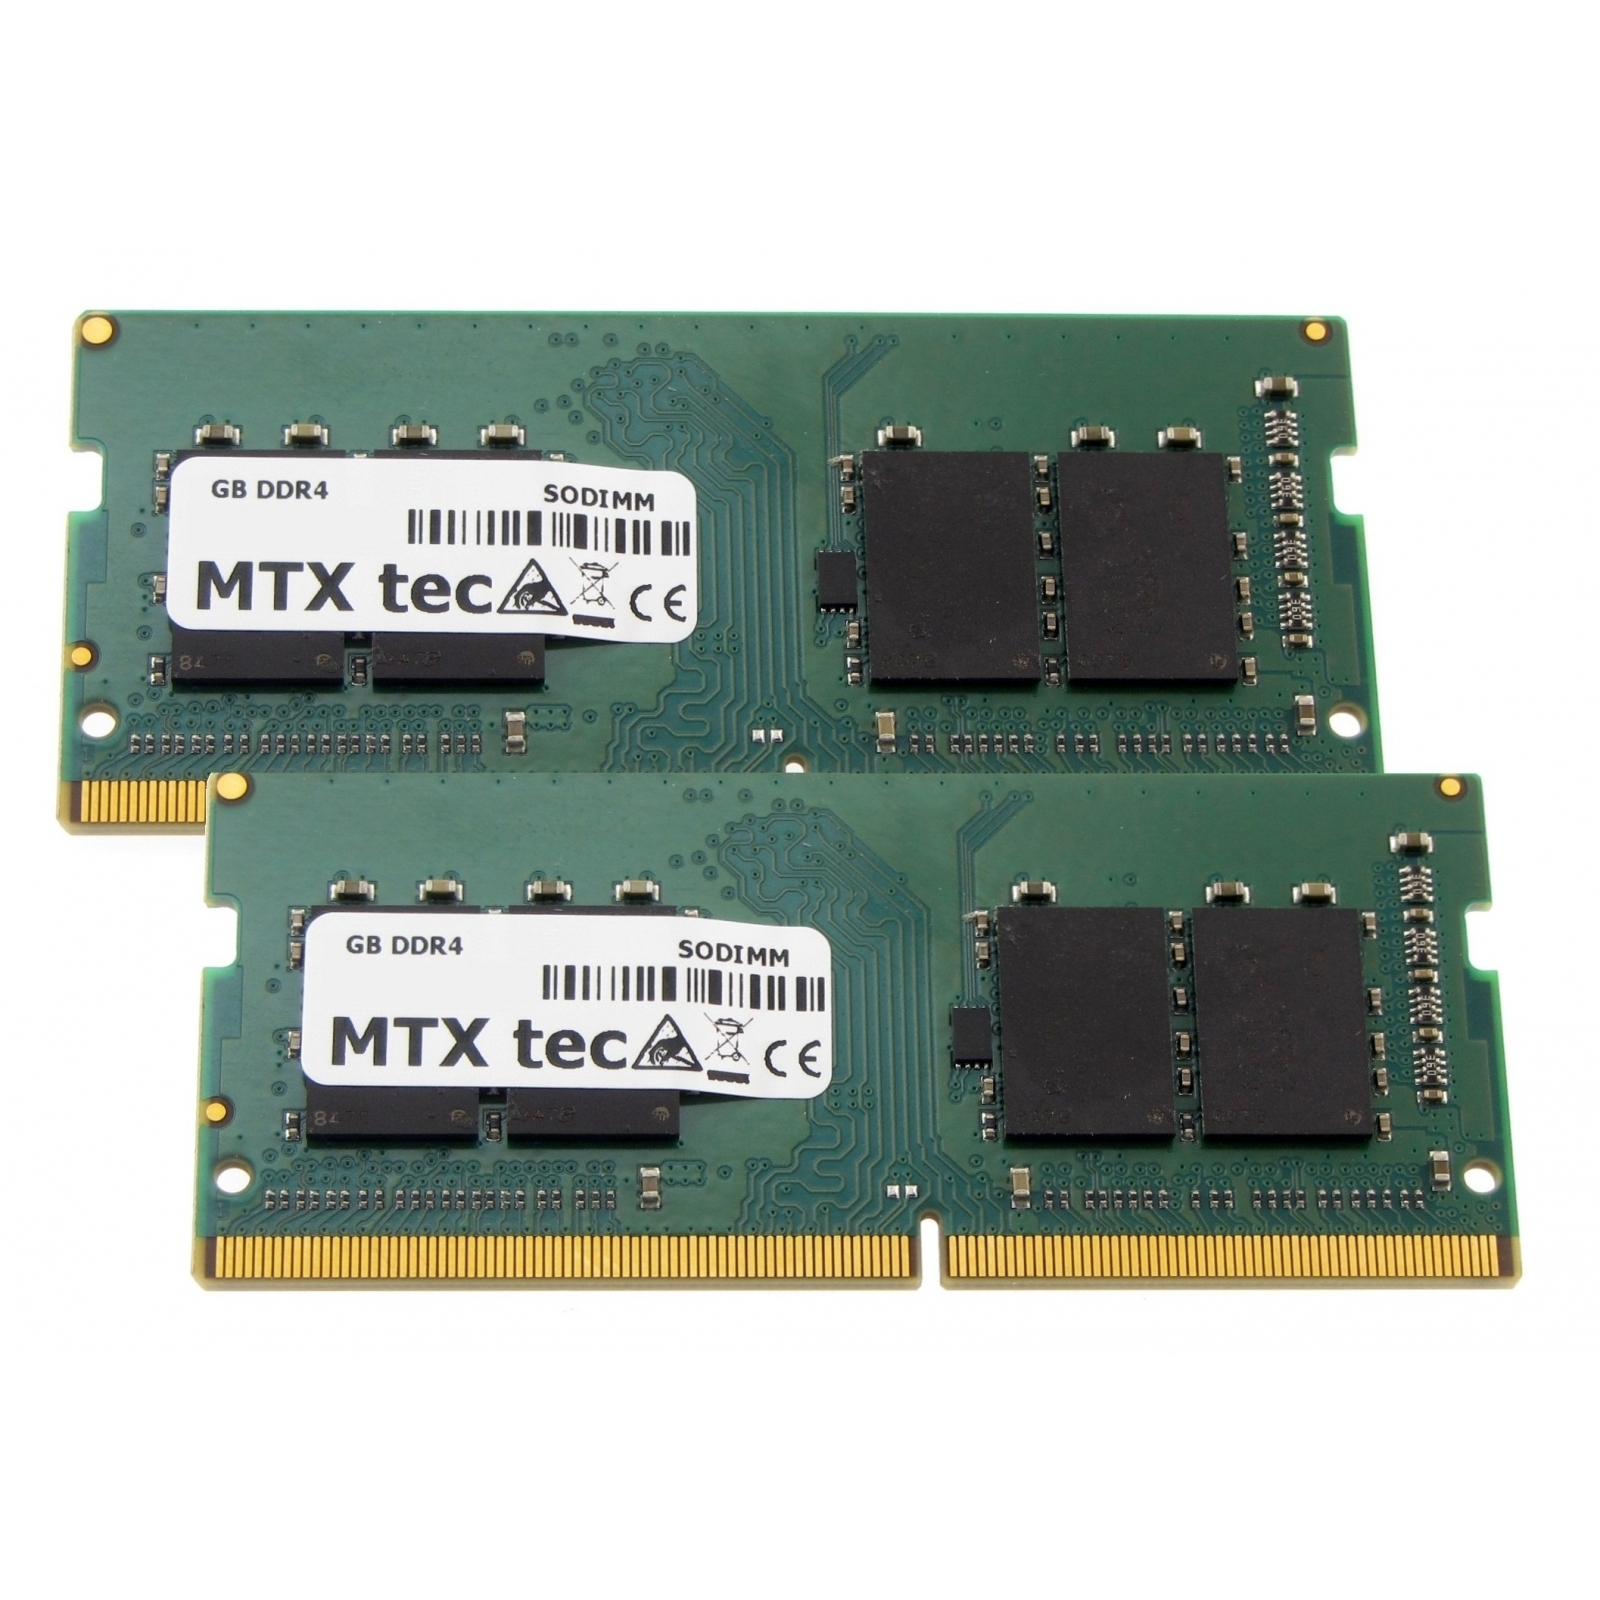 2x16GB 16 Kit Arbeitsspeicher Notebook DDR4 SODIMM GB 260 pin MTXTEC Notebook-Speicher 2133MHz PC4-17000 32GB DDR4